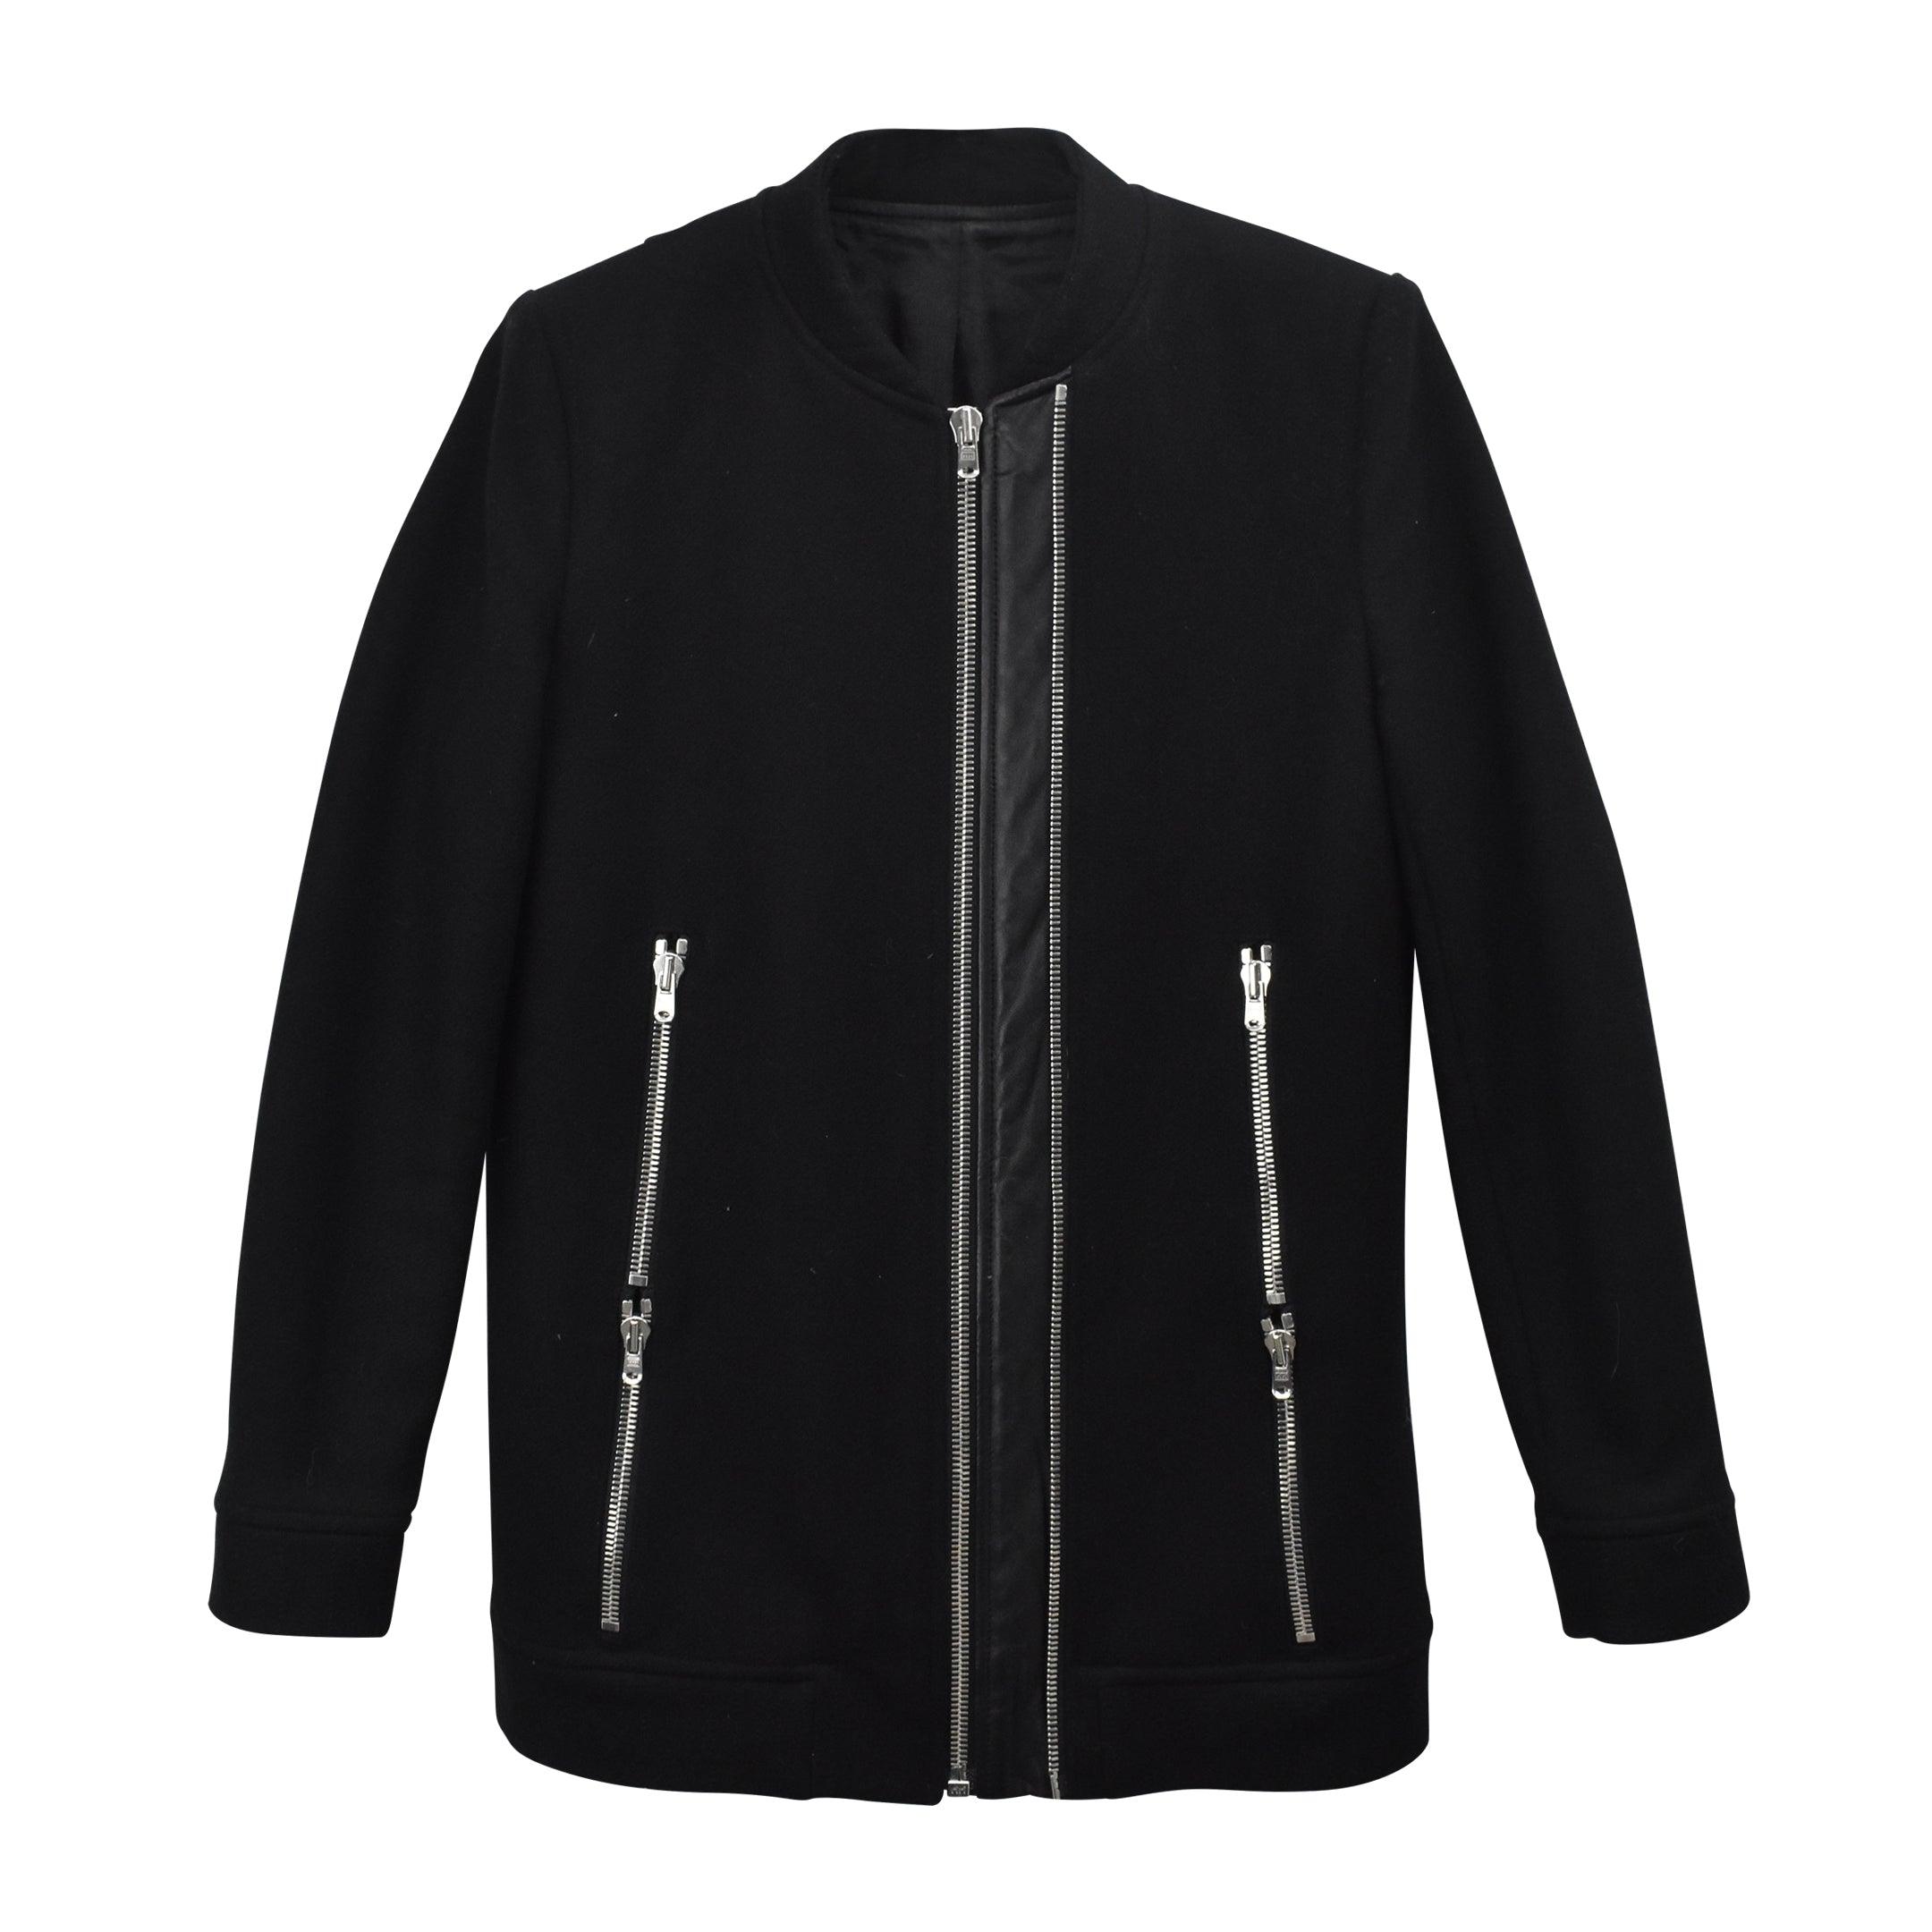 Black leather jacket  The Kooples - Canada